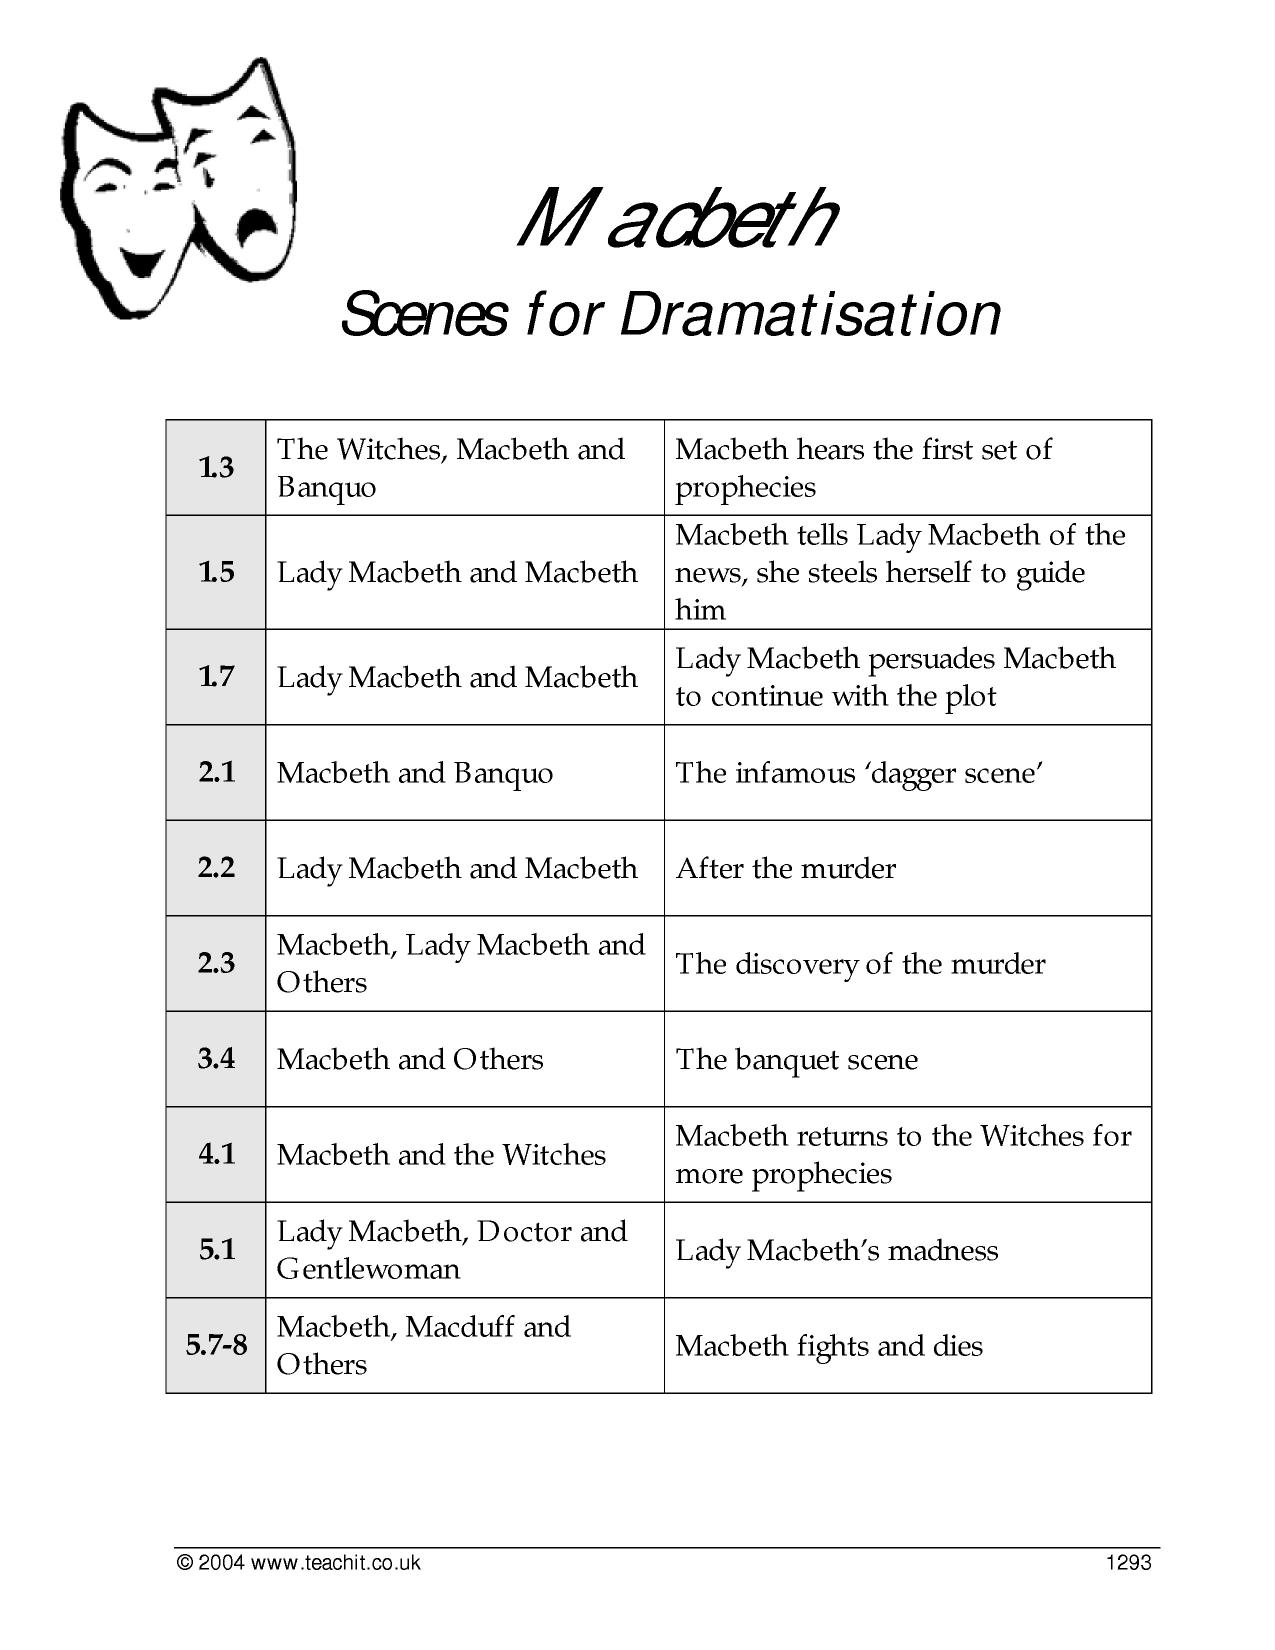 Macbeth notes and essays